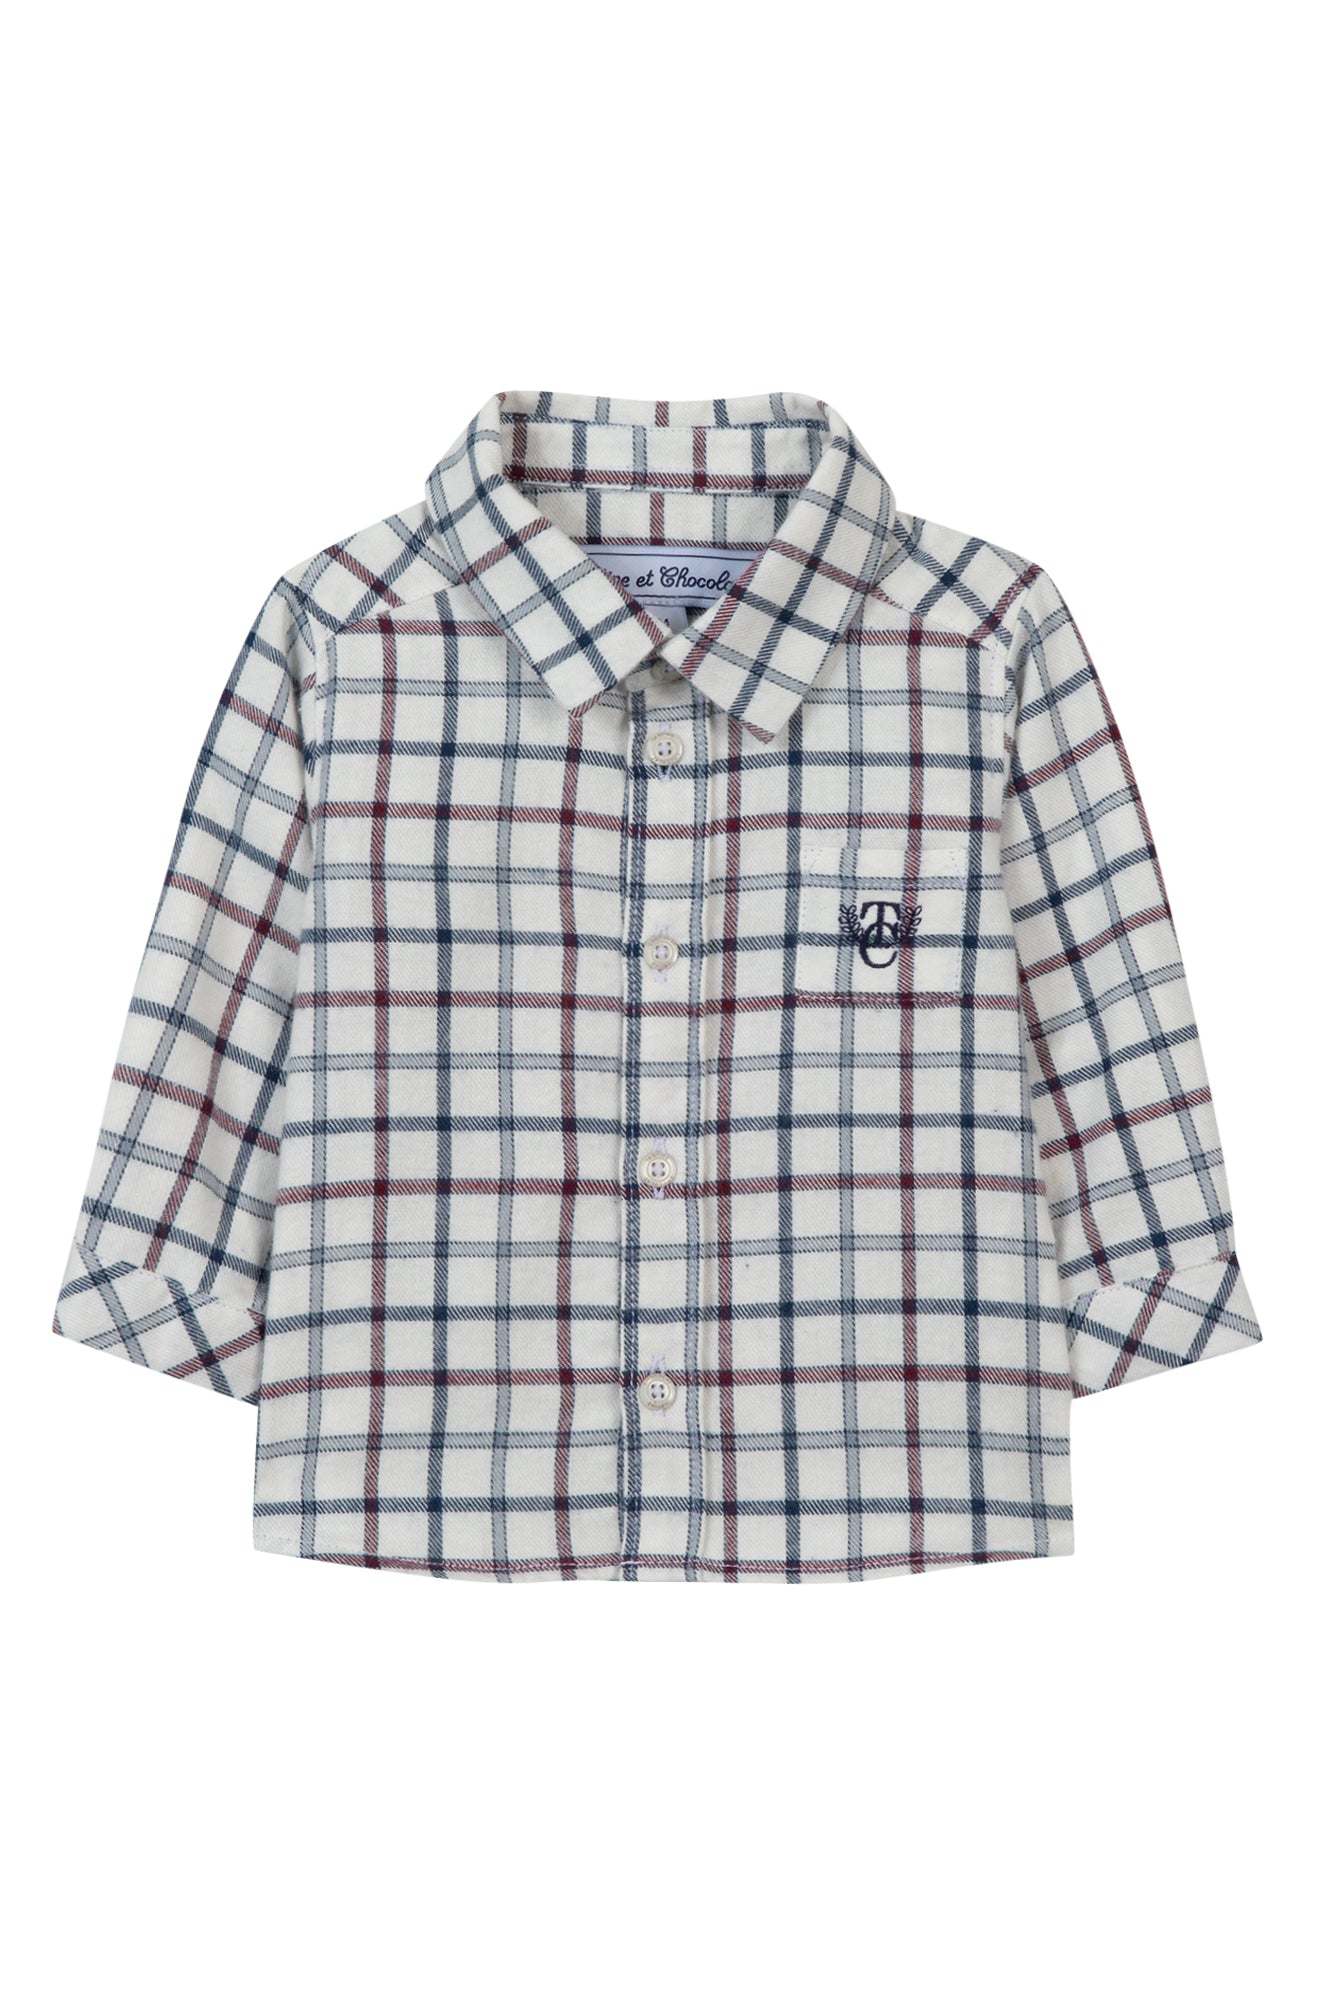 Tartine Boy's LS Flannel Check Button Up Shirt